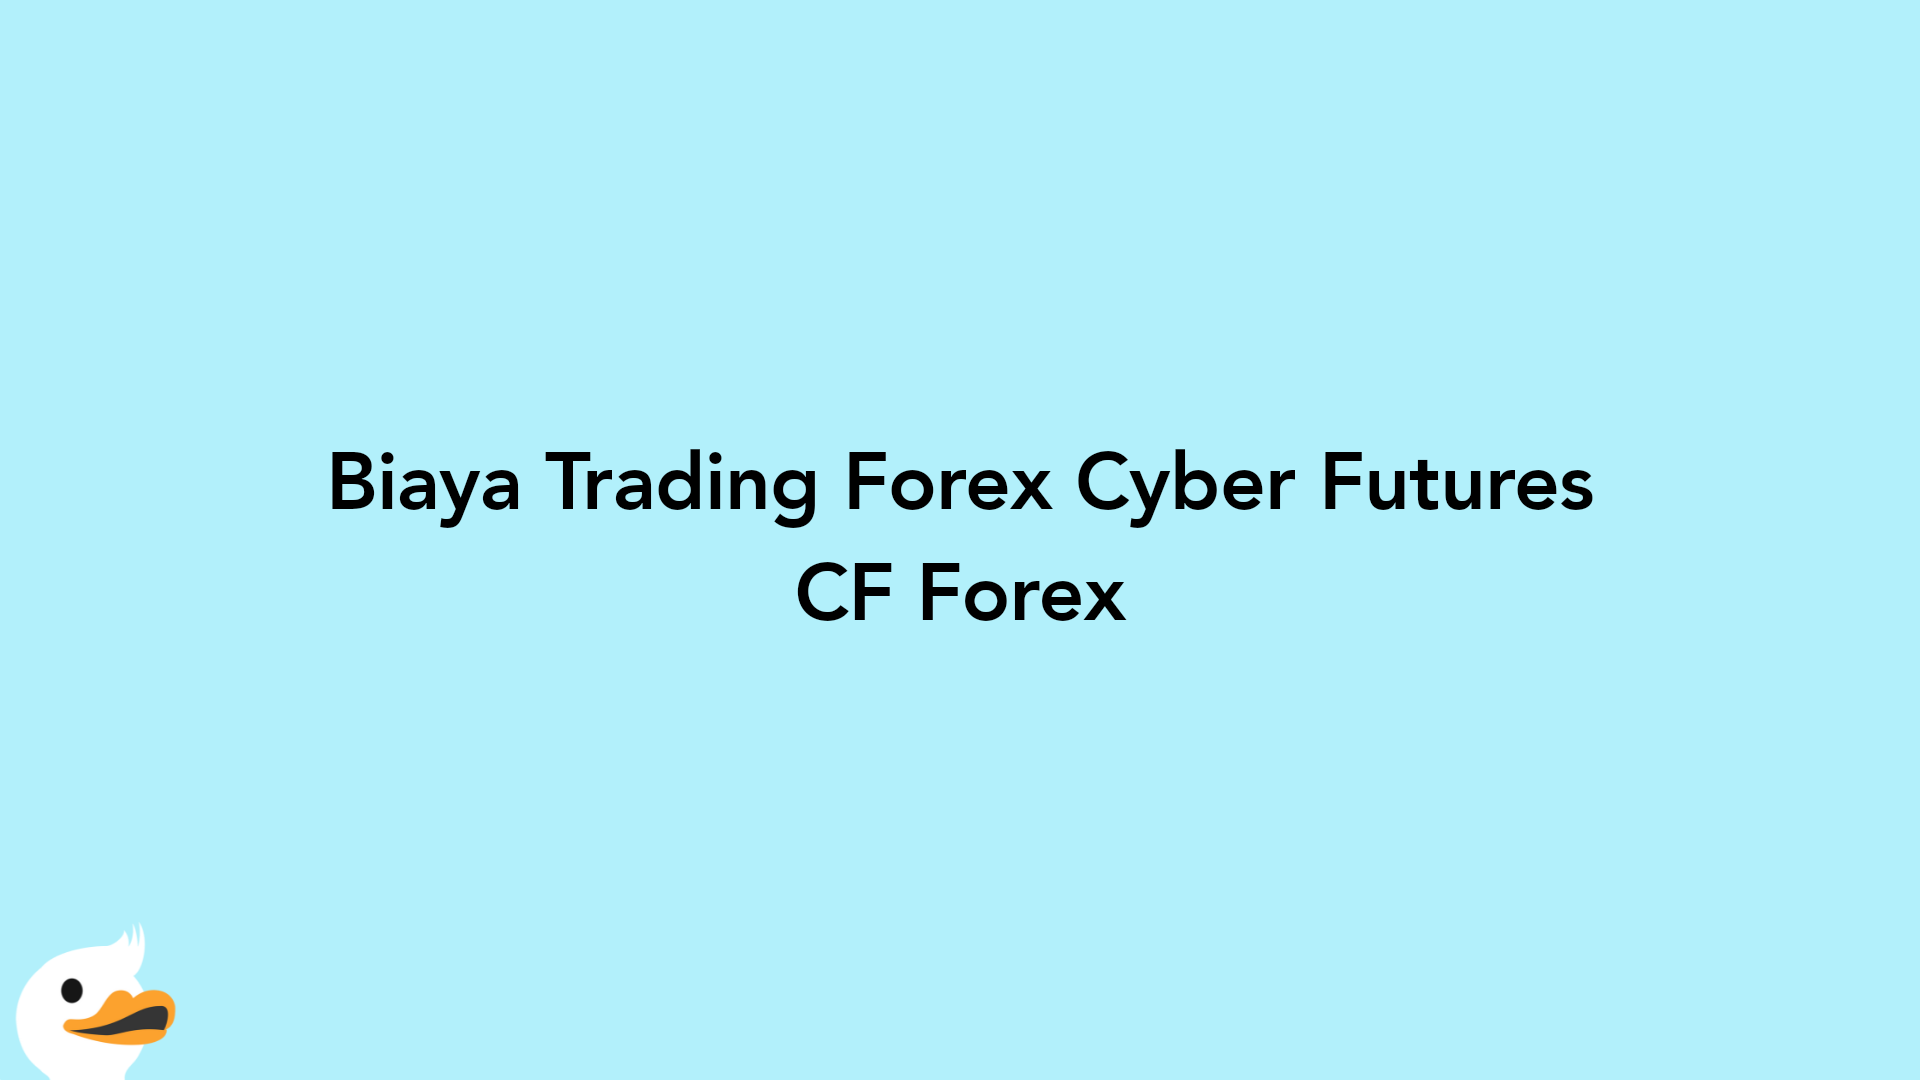 Biaya Trading Forex Cyber Futures CF Forex